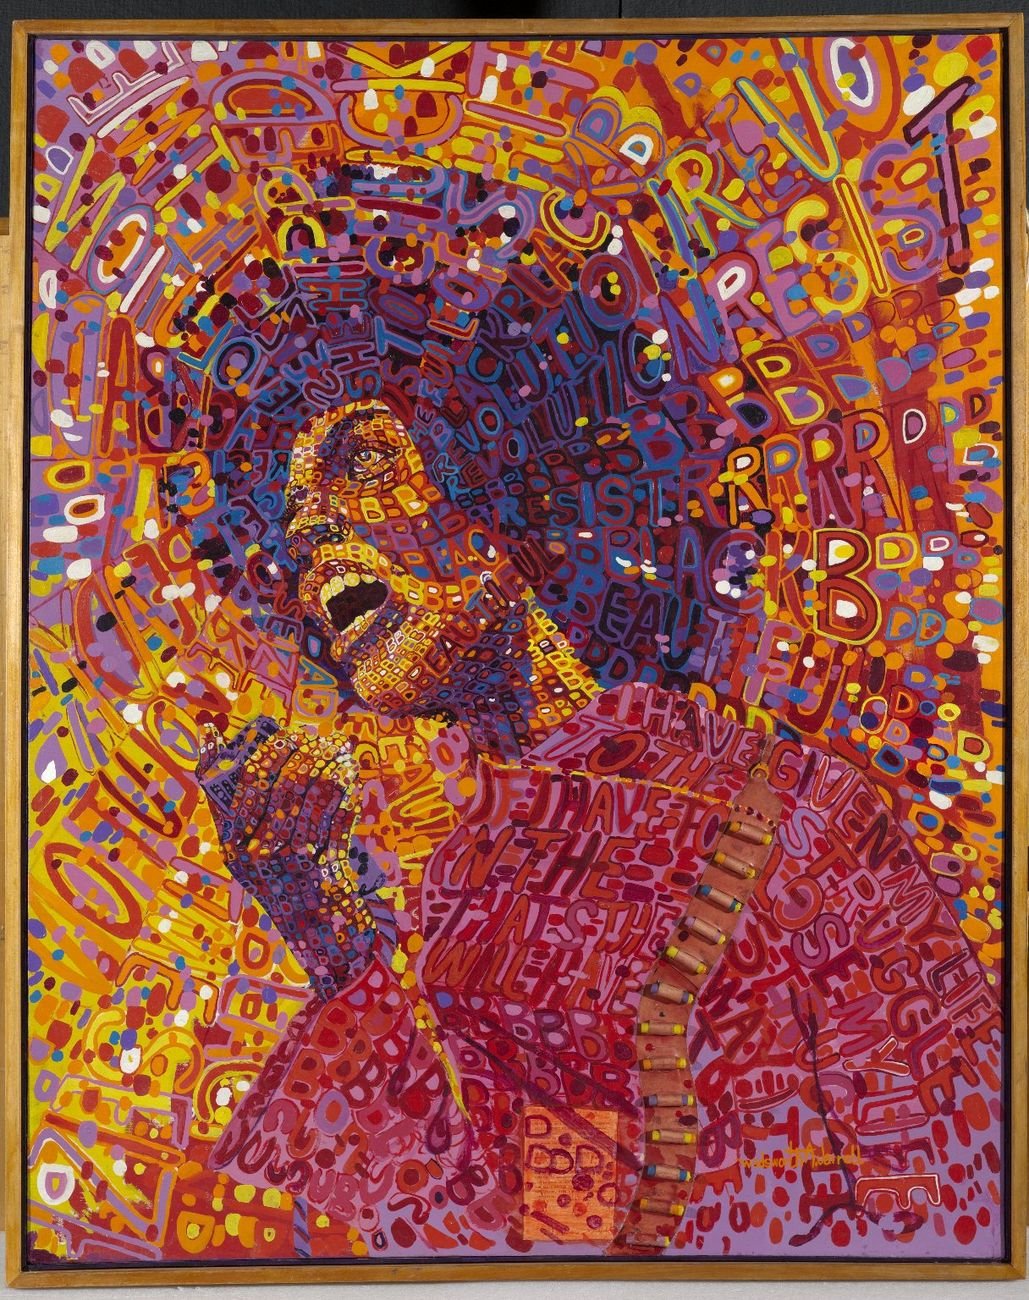 Wadsworth A. Jarrell, Revolutionary (Angela Davis), 1971. Brooklyn Museum, New York © Wadsworth Jarrell